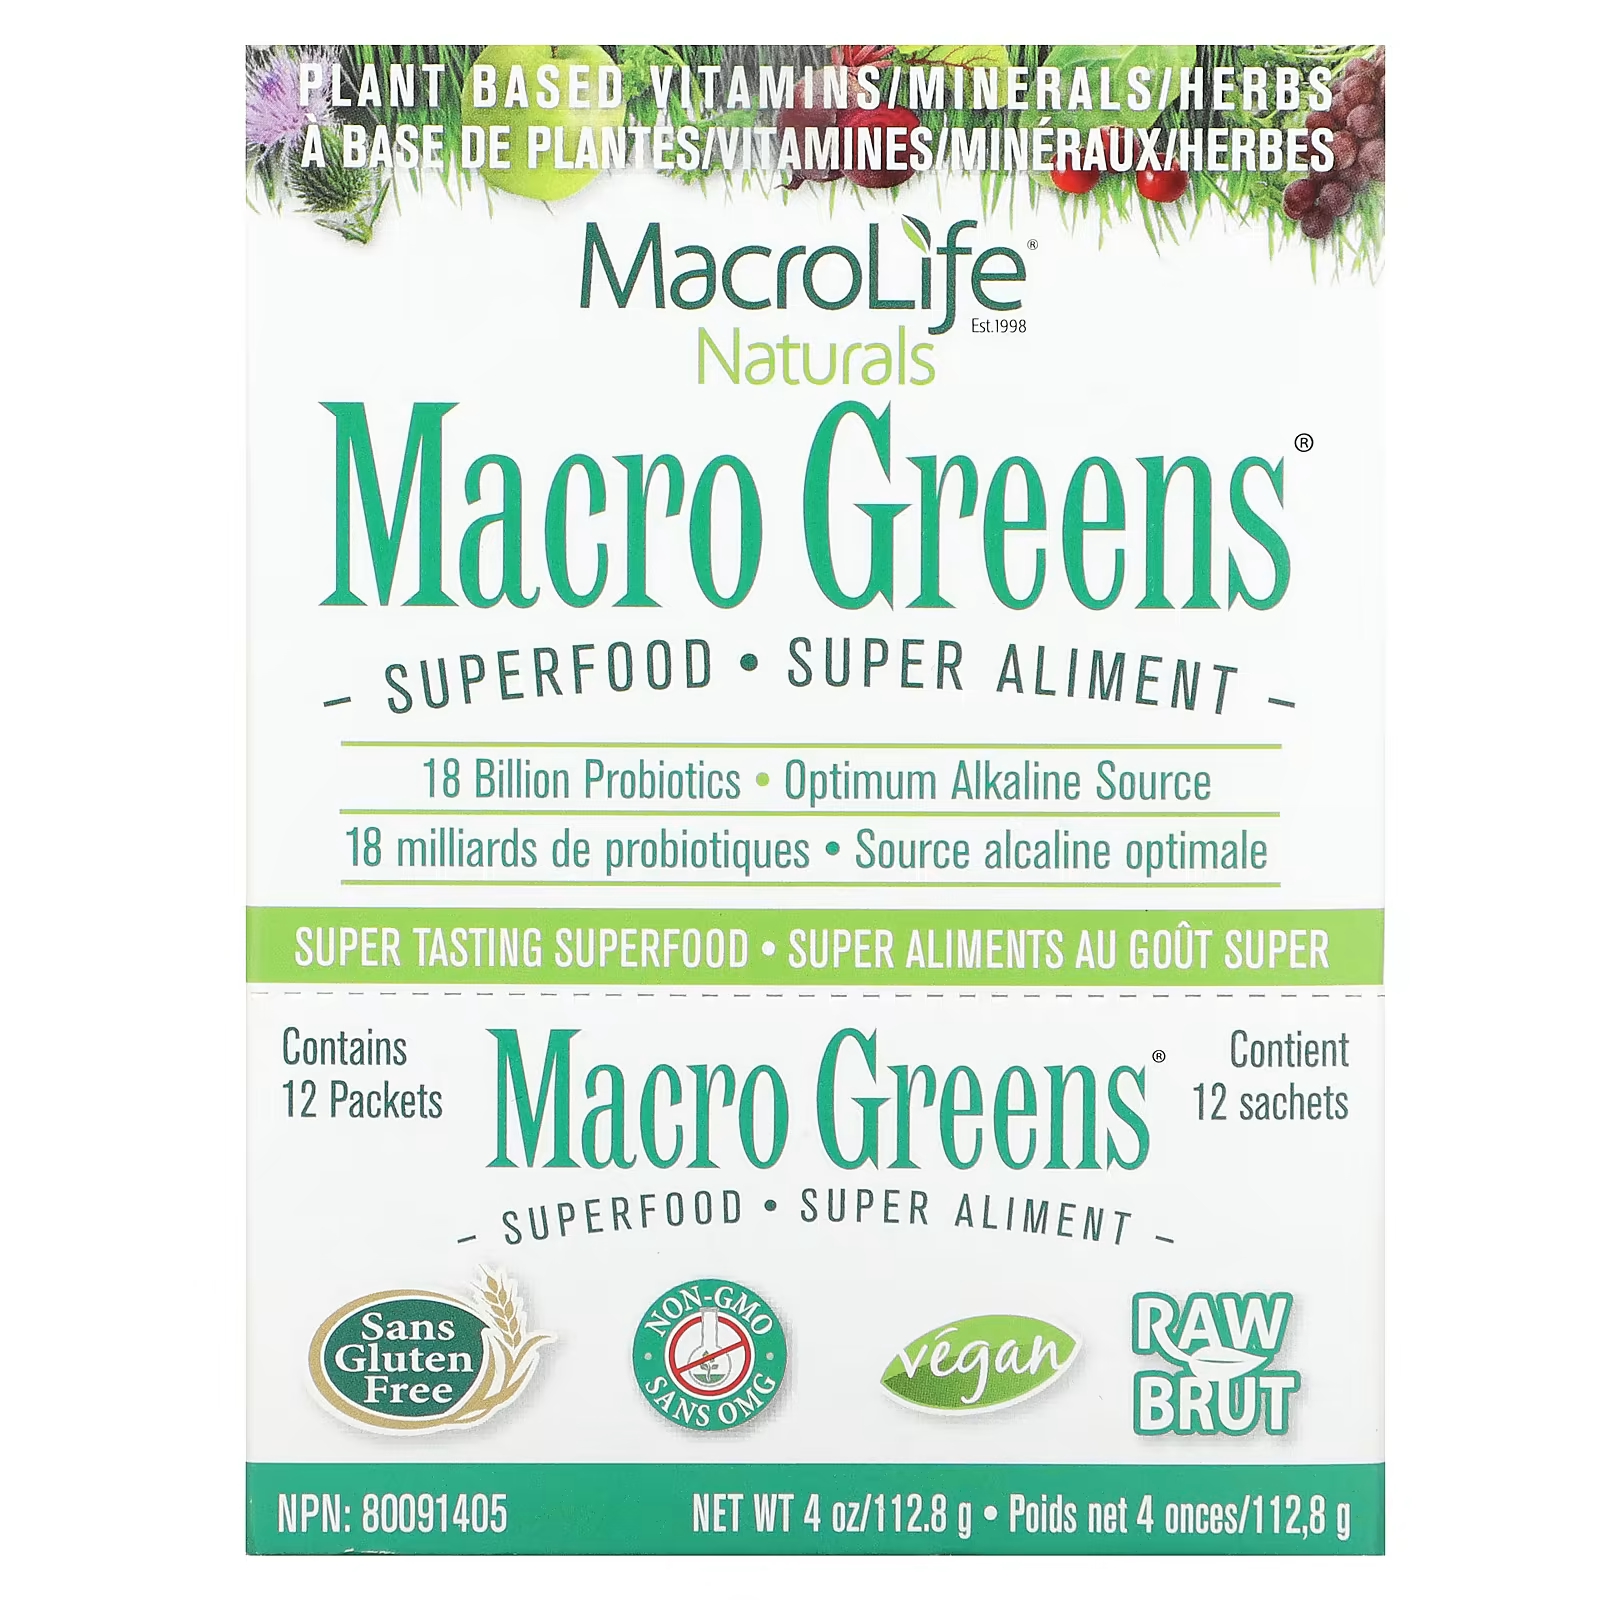 Пищевая добавка Macrolife Naturals Macro Greens Superfood, 12 пакетиков по 9,4 г